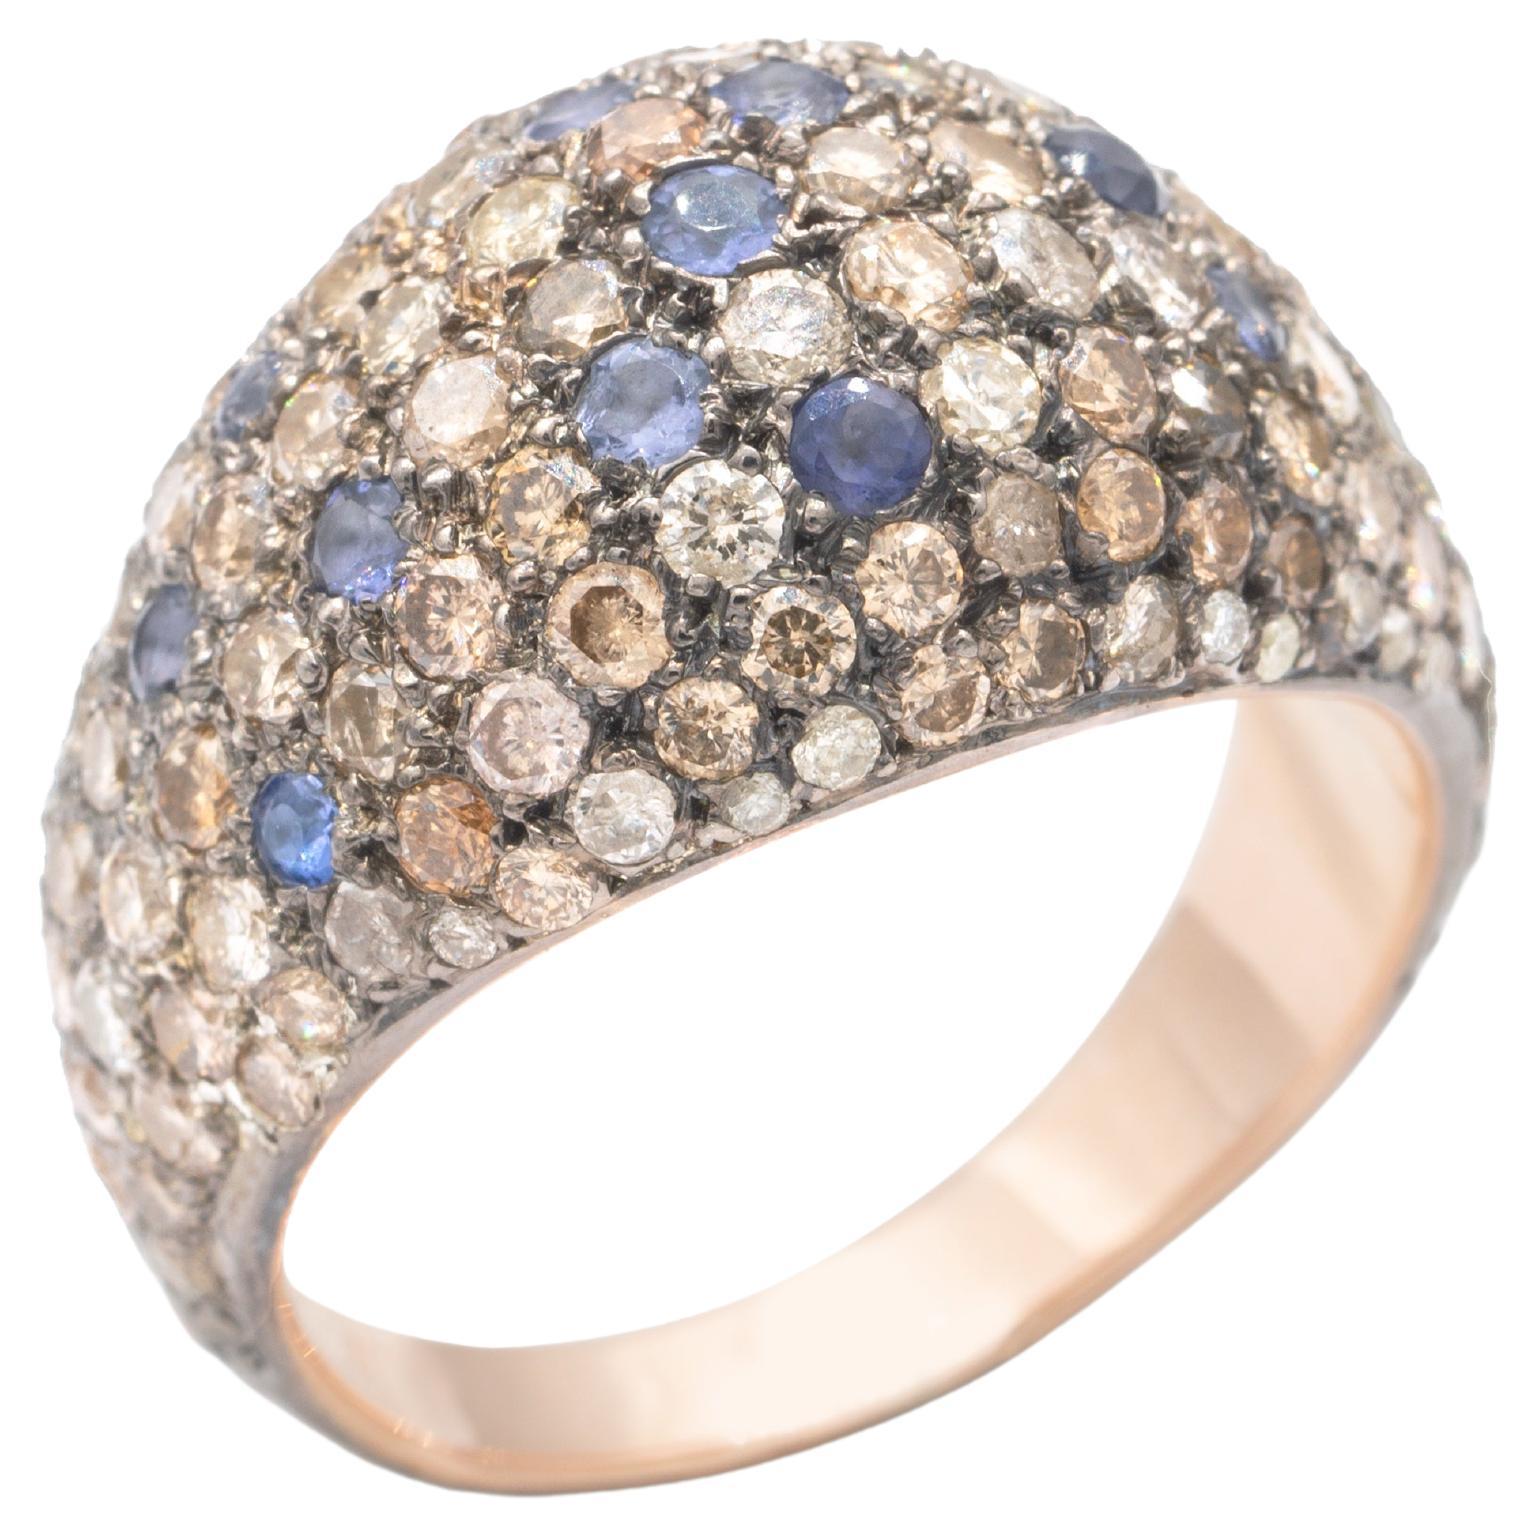 For Sale:   URART Dainty "Hill" Ring 9k Rose Gold, Sterling Silver, Cognac Diamonds, Iolite